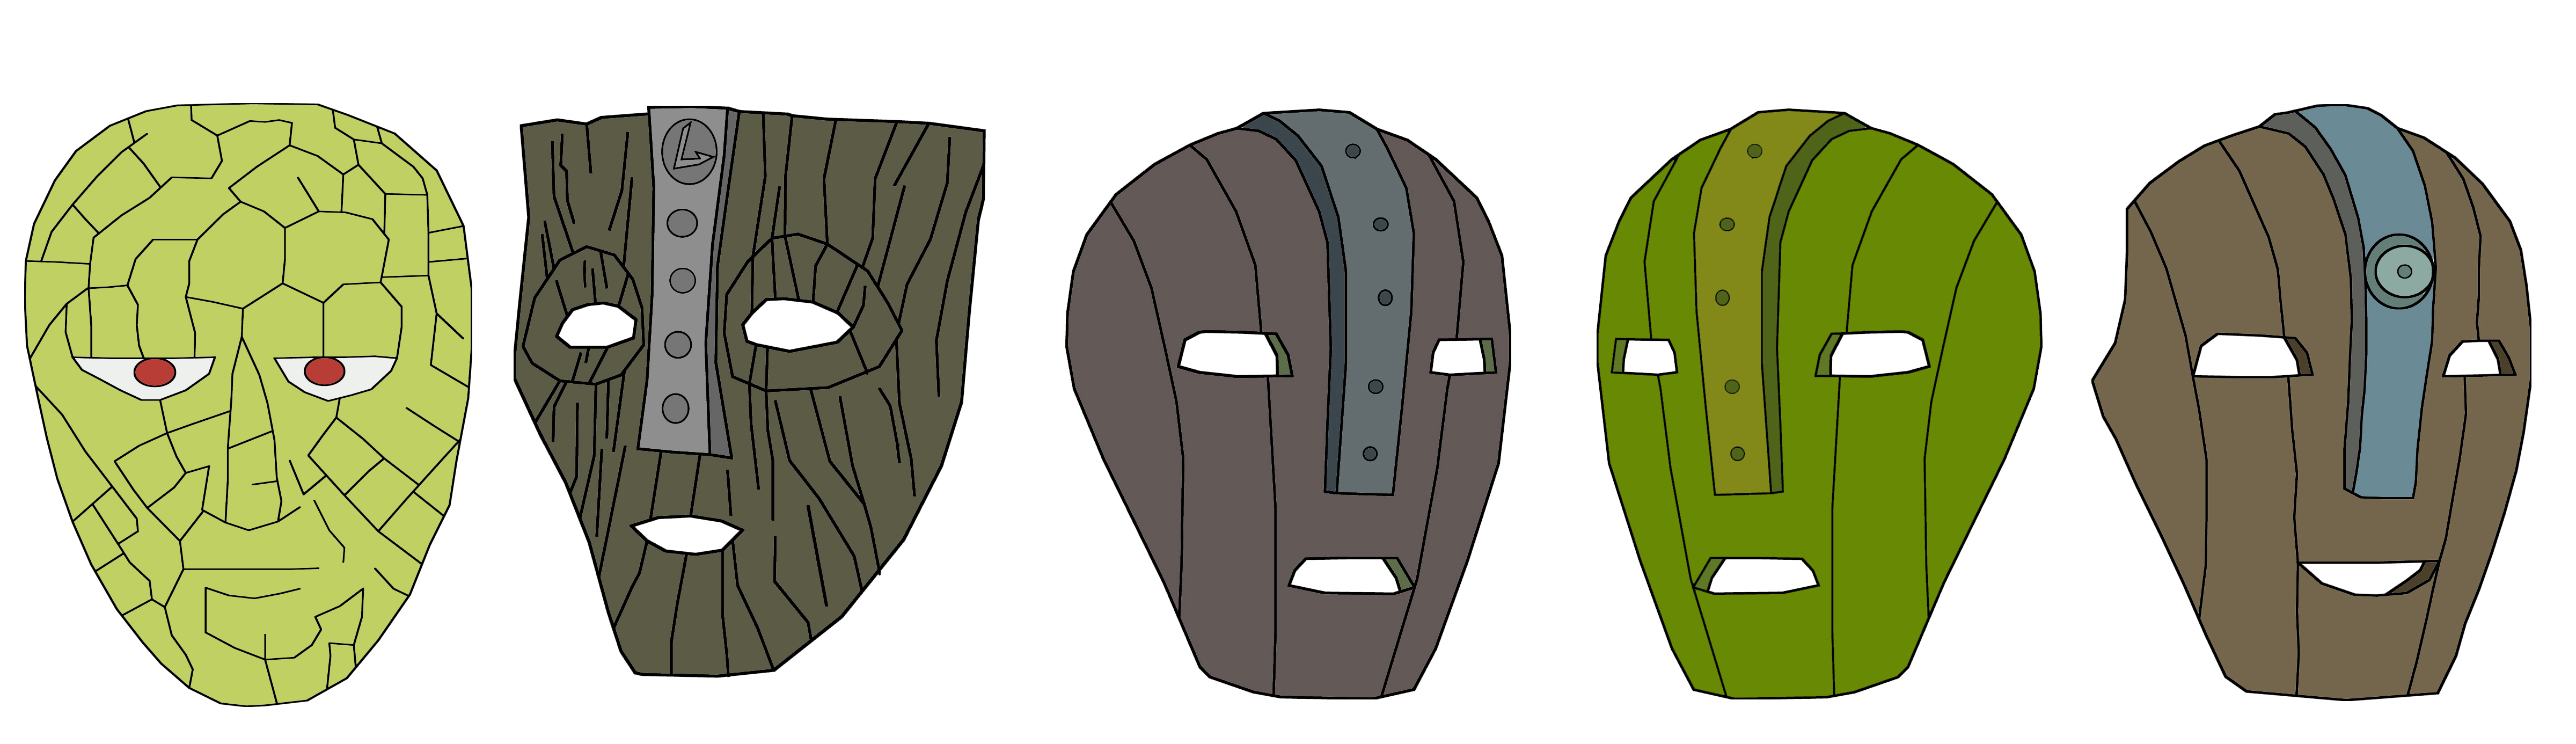 The (object) | The Mask Wiki | Fandom